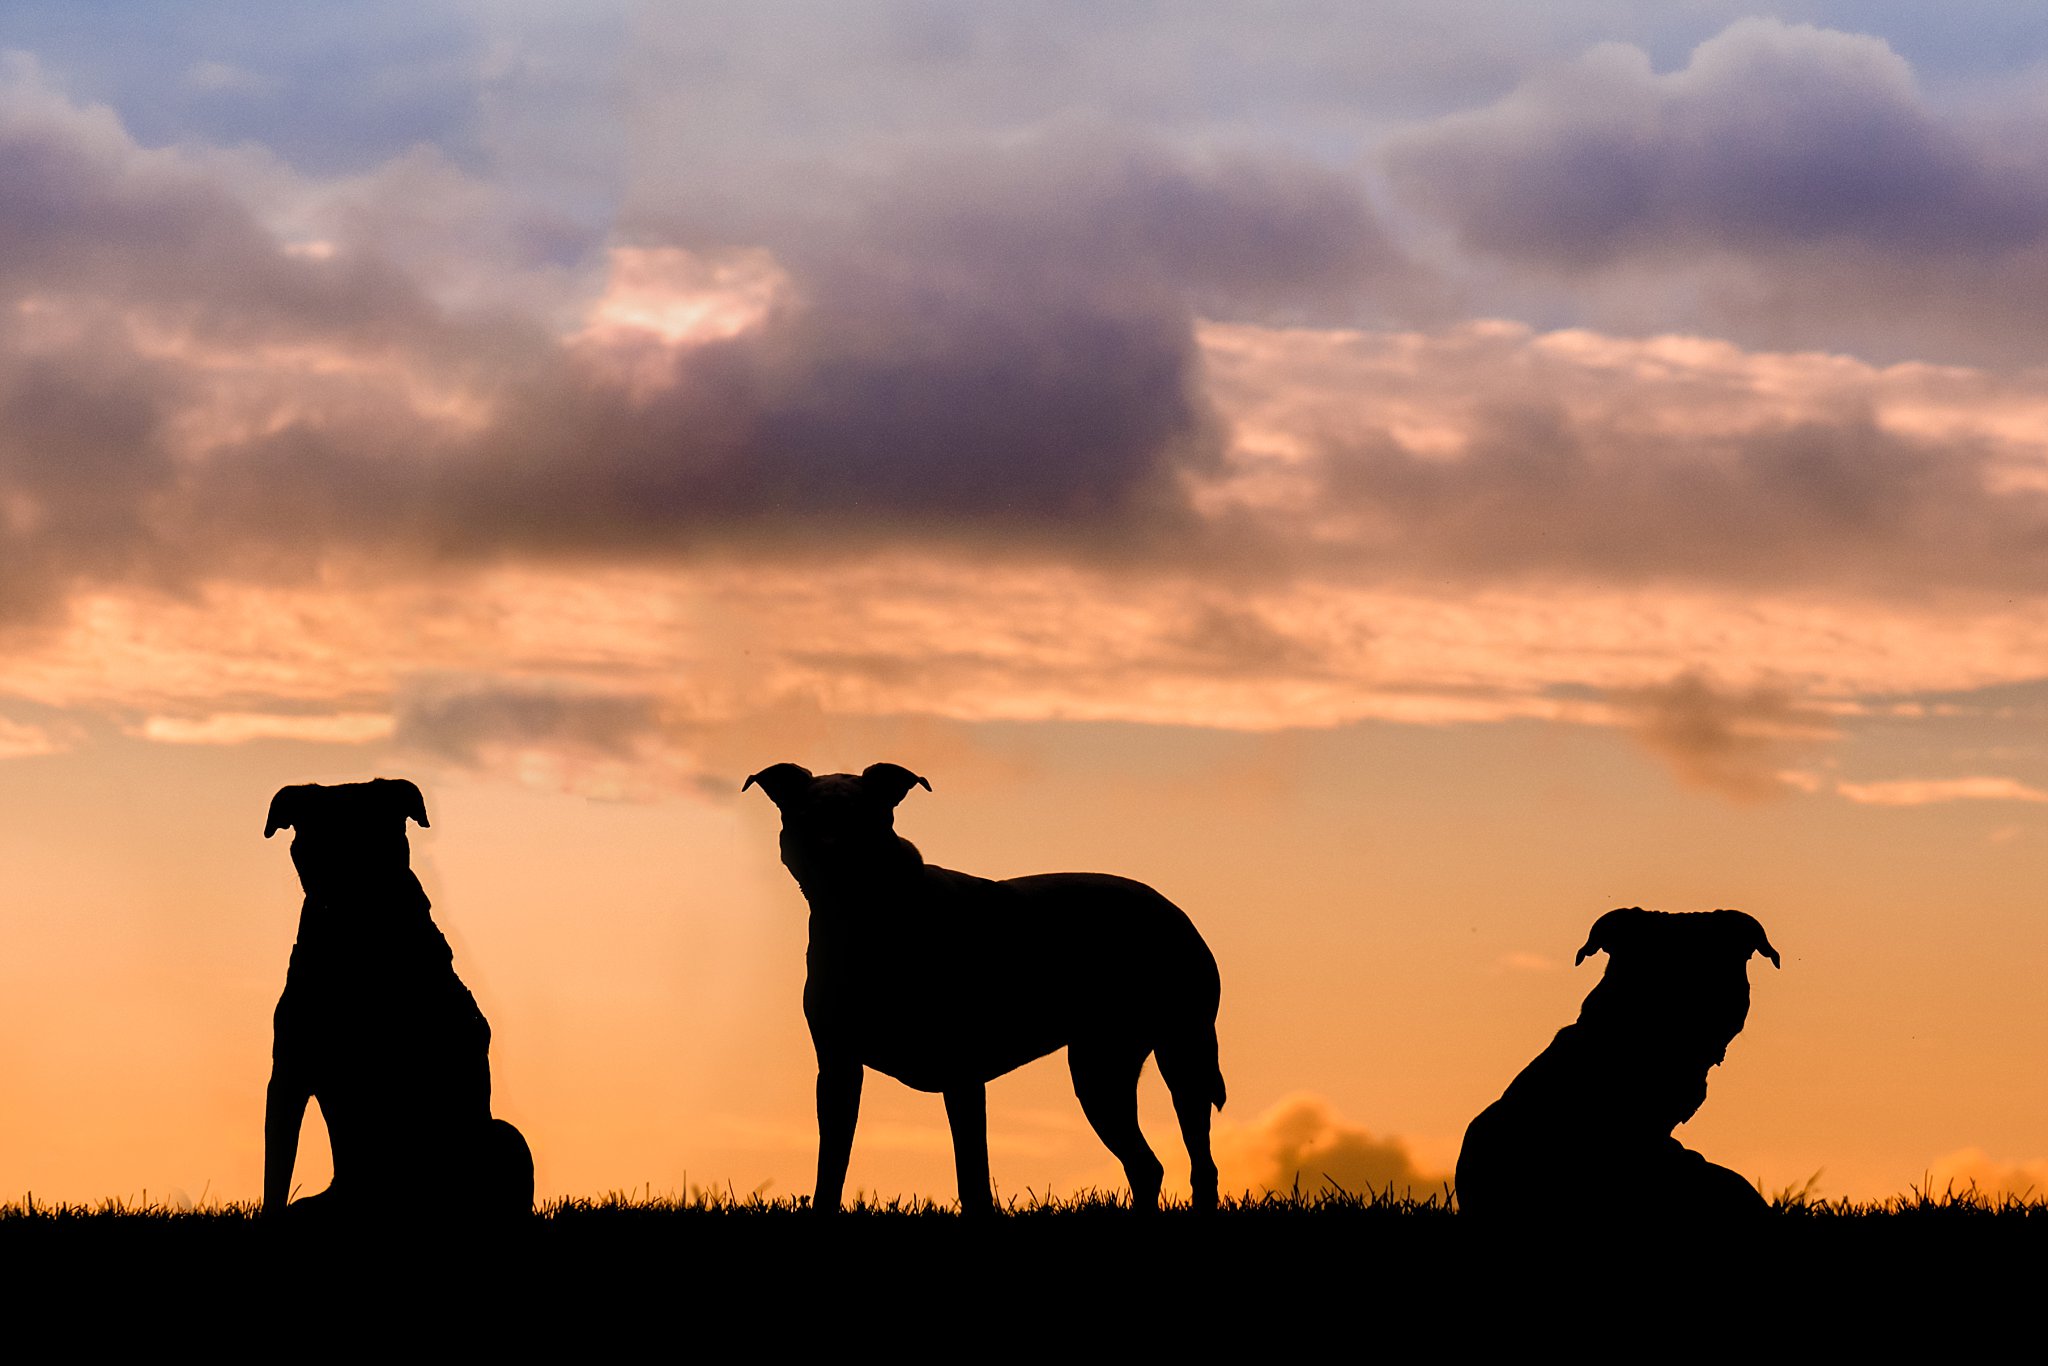 three dog silhouettes against an orange sunset sky